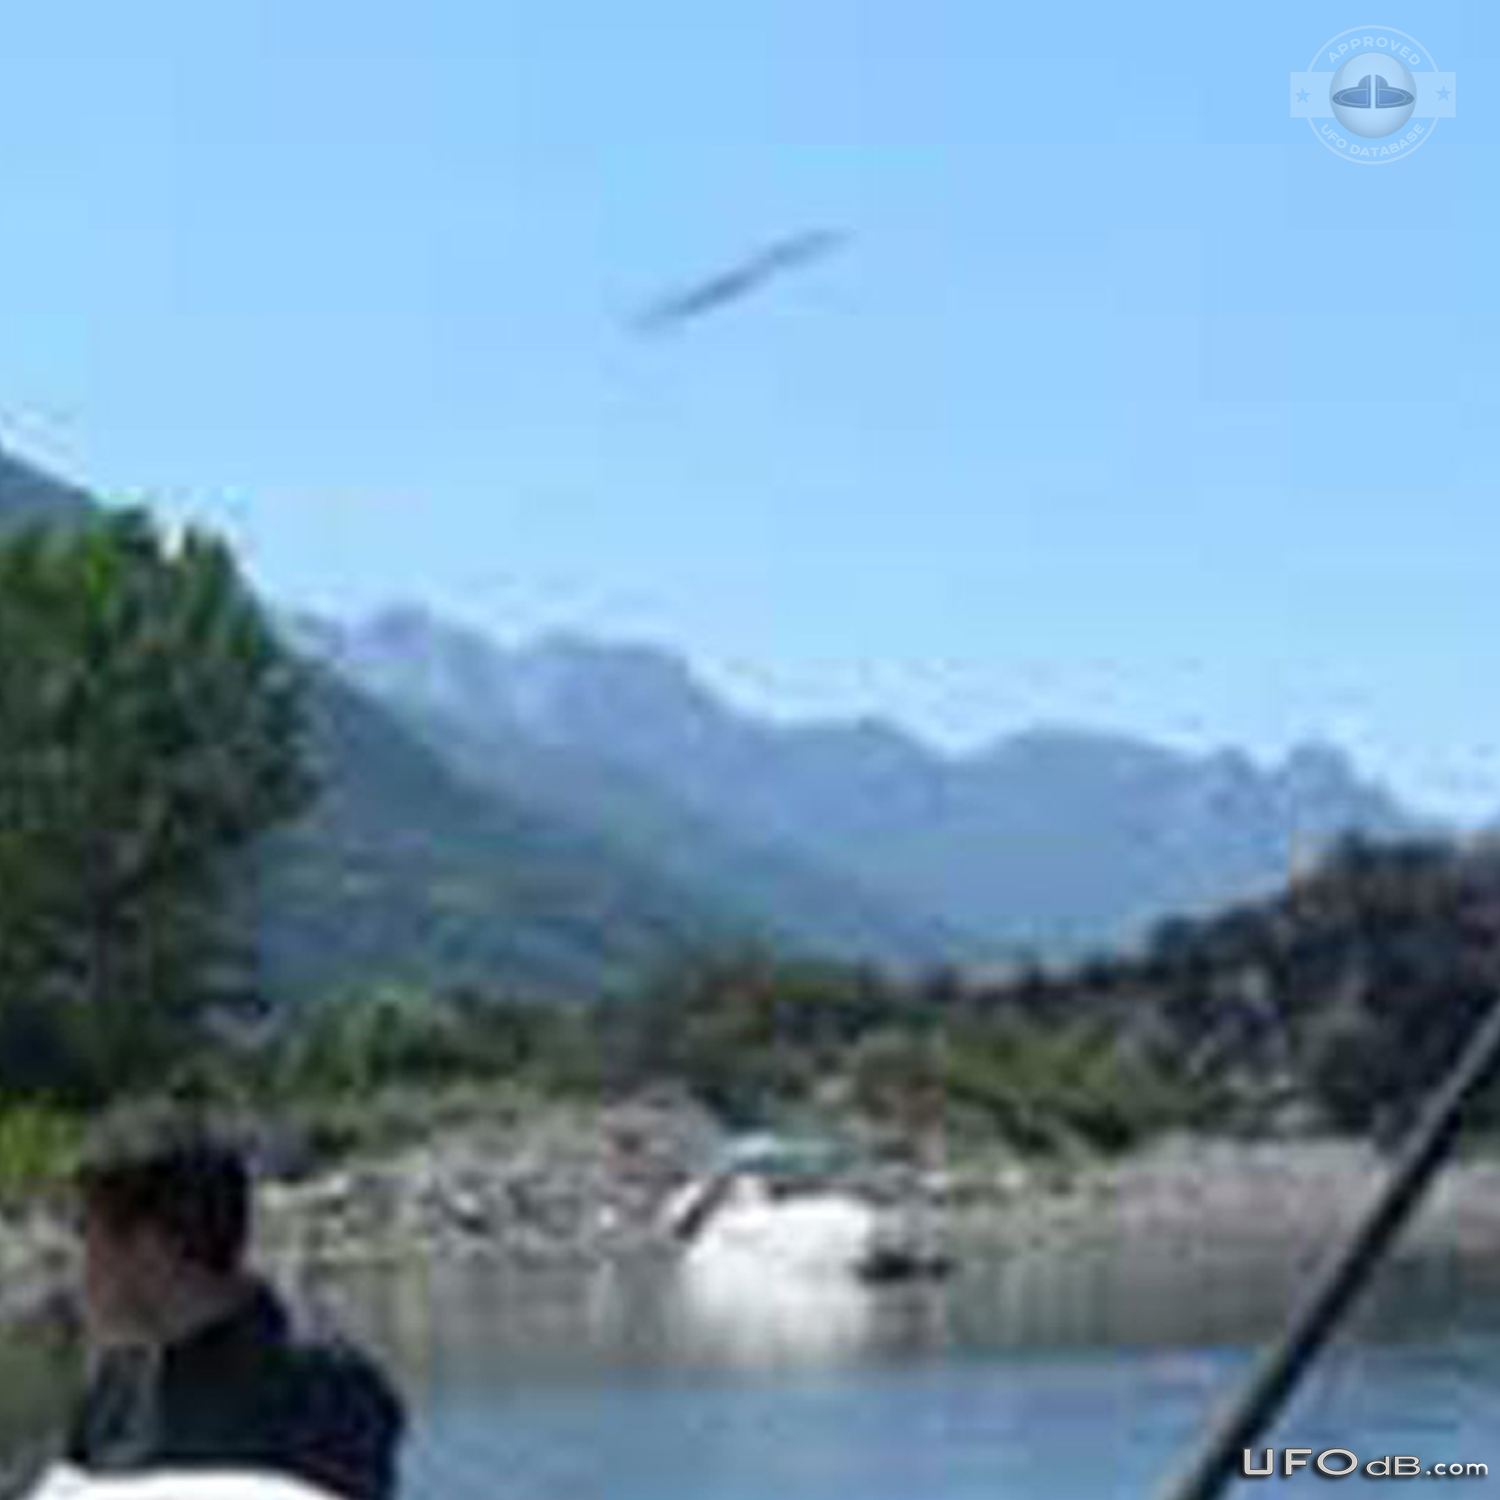 Tourist UFO picture published in Newspaper in San Fabian, Chile | 2011 UFO Picture #262-4